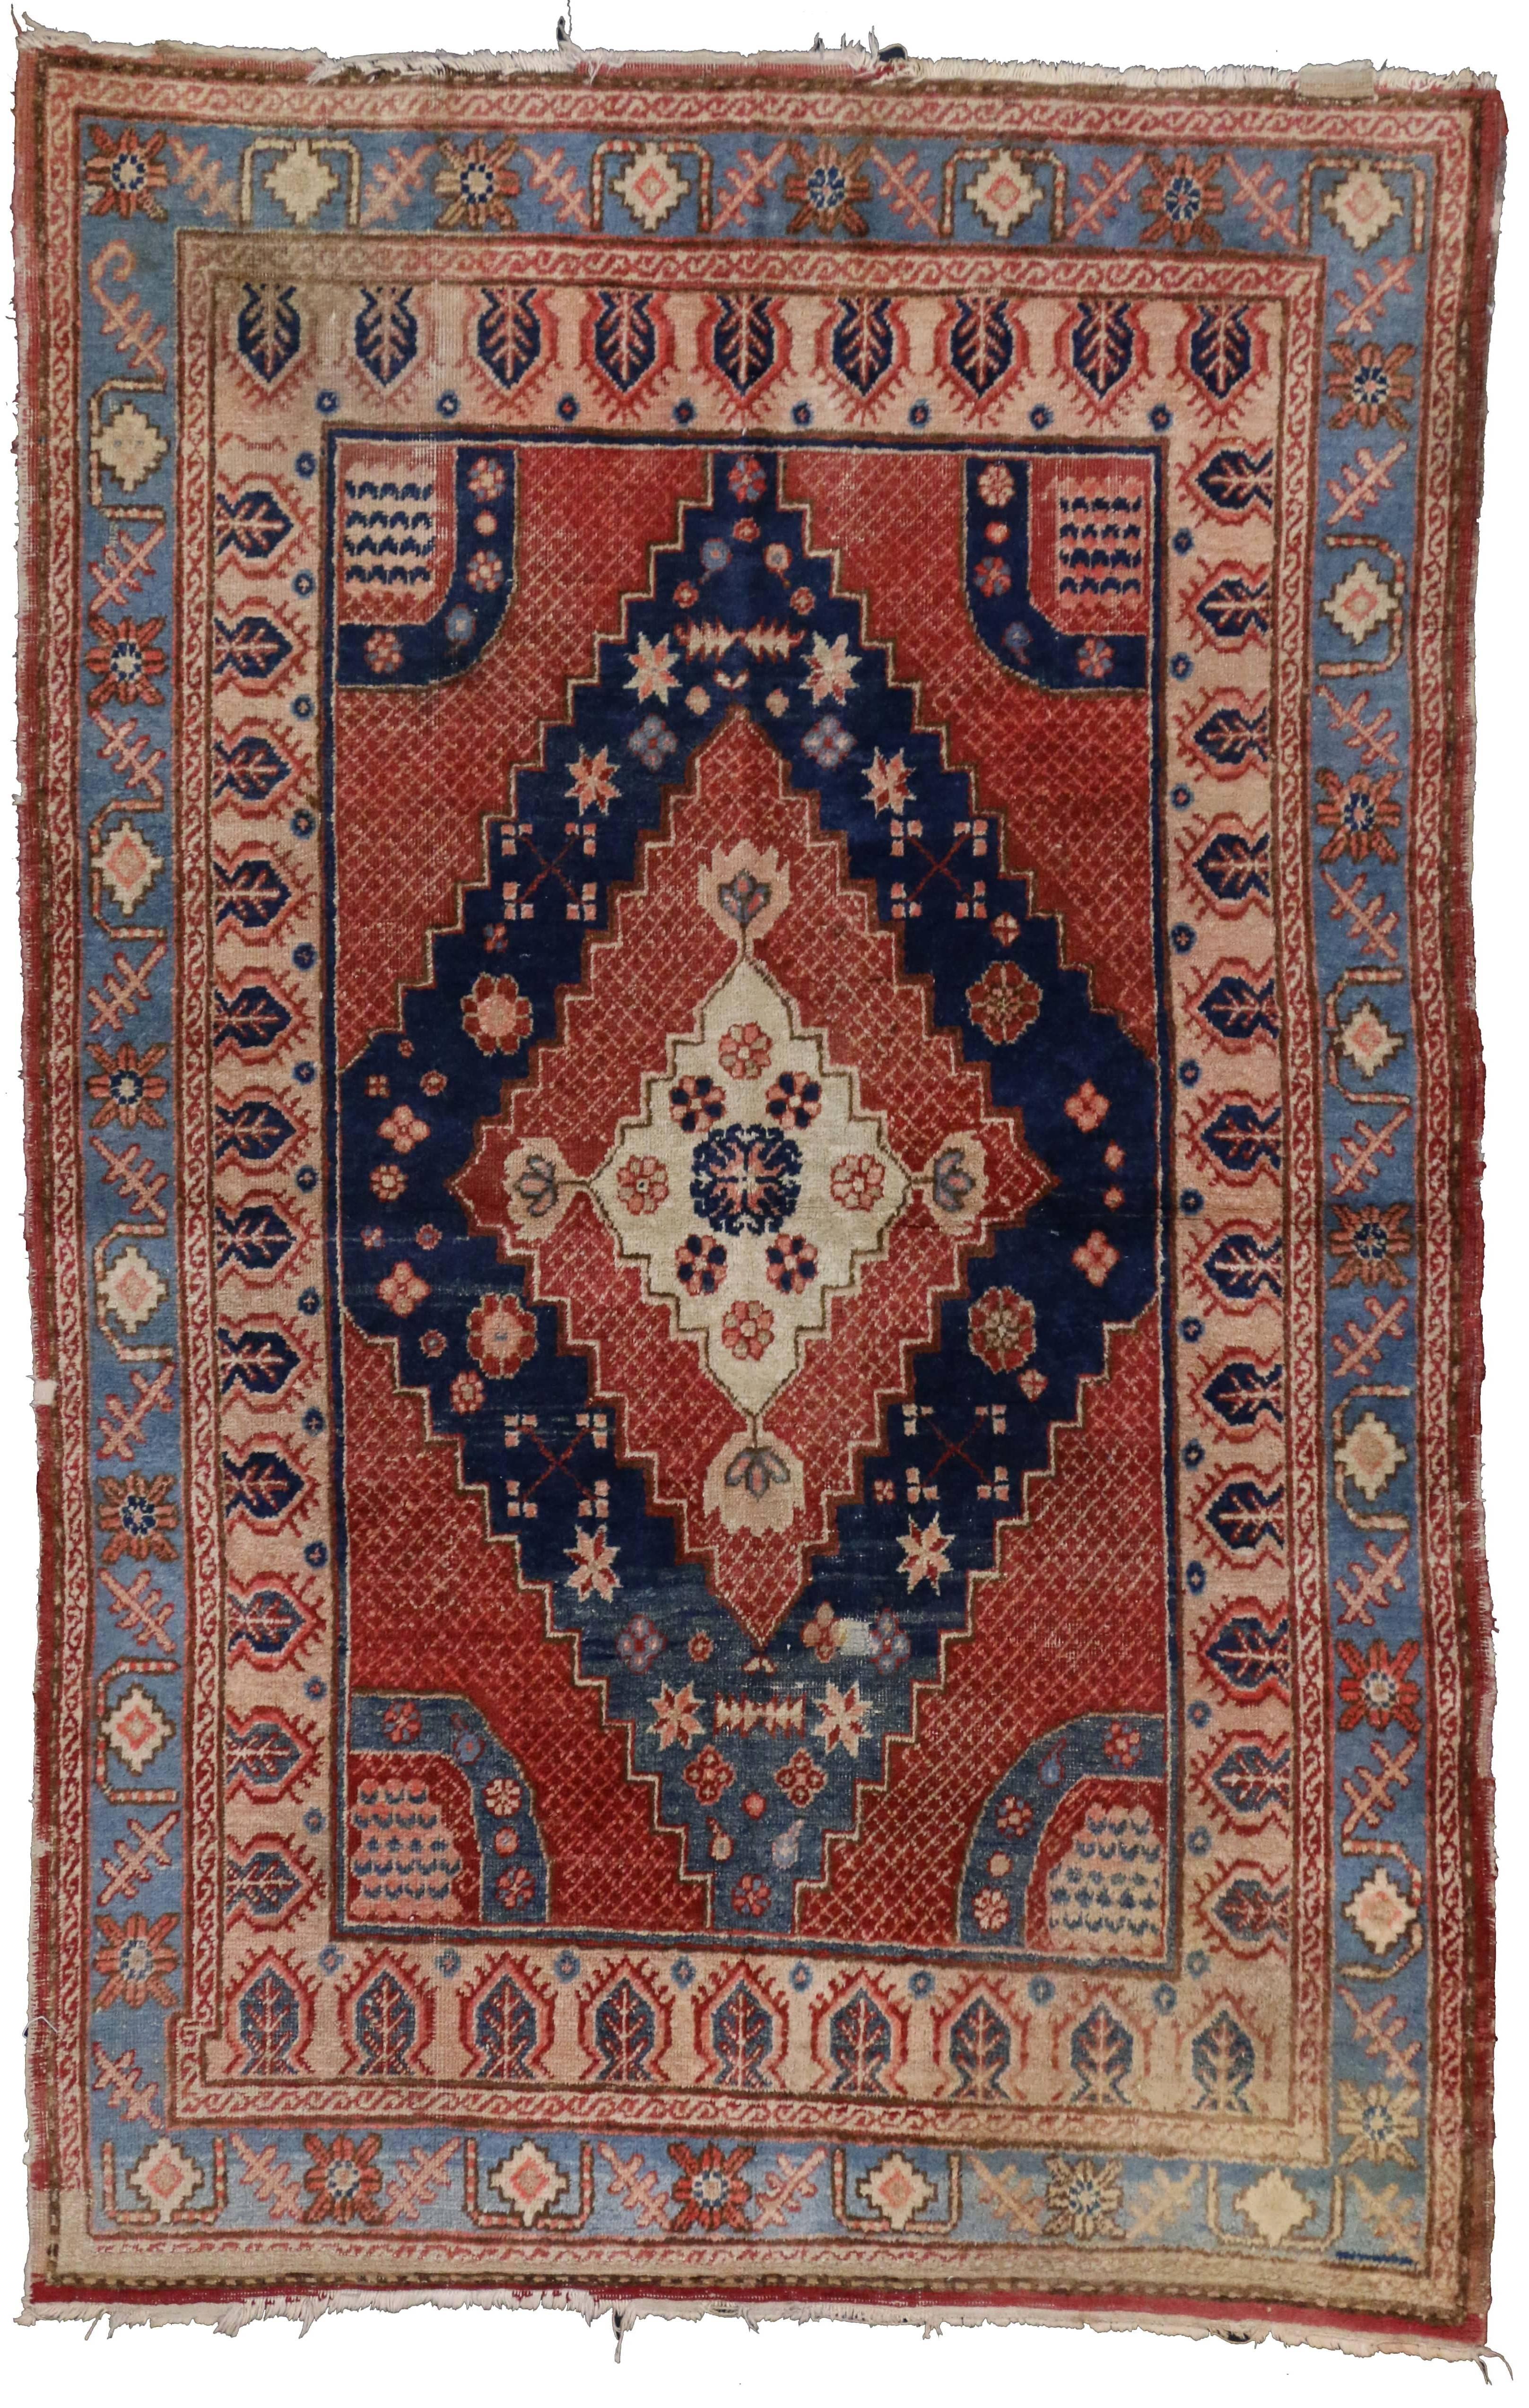 20th Century British Colonial Style Antique Persian Hamadan Rug, Entry or Foyer Rug